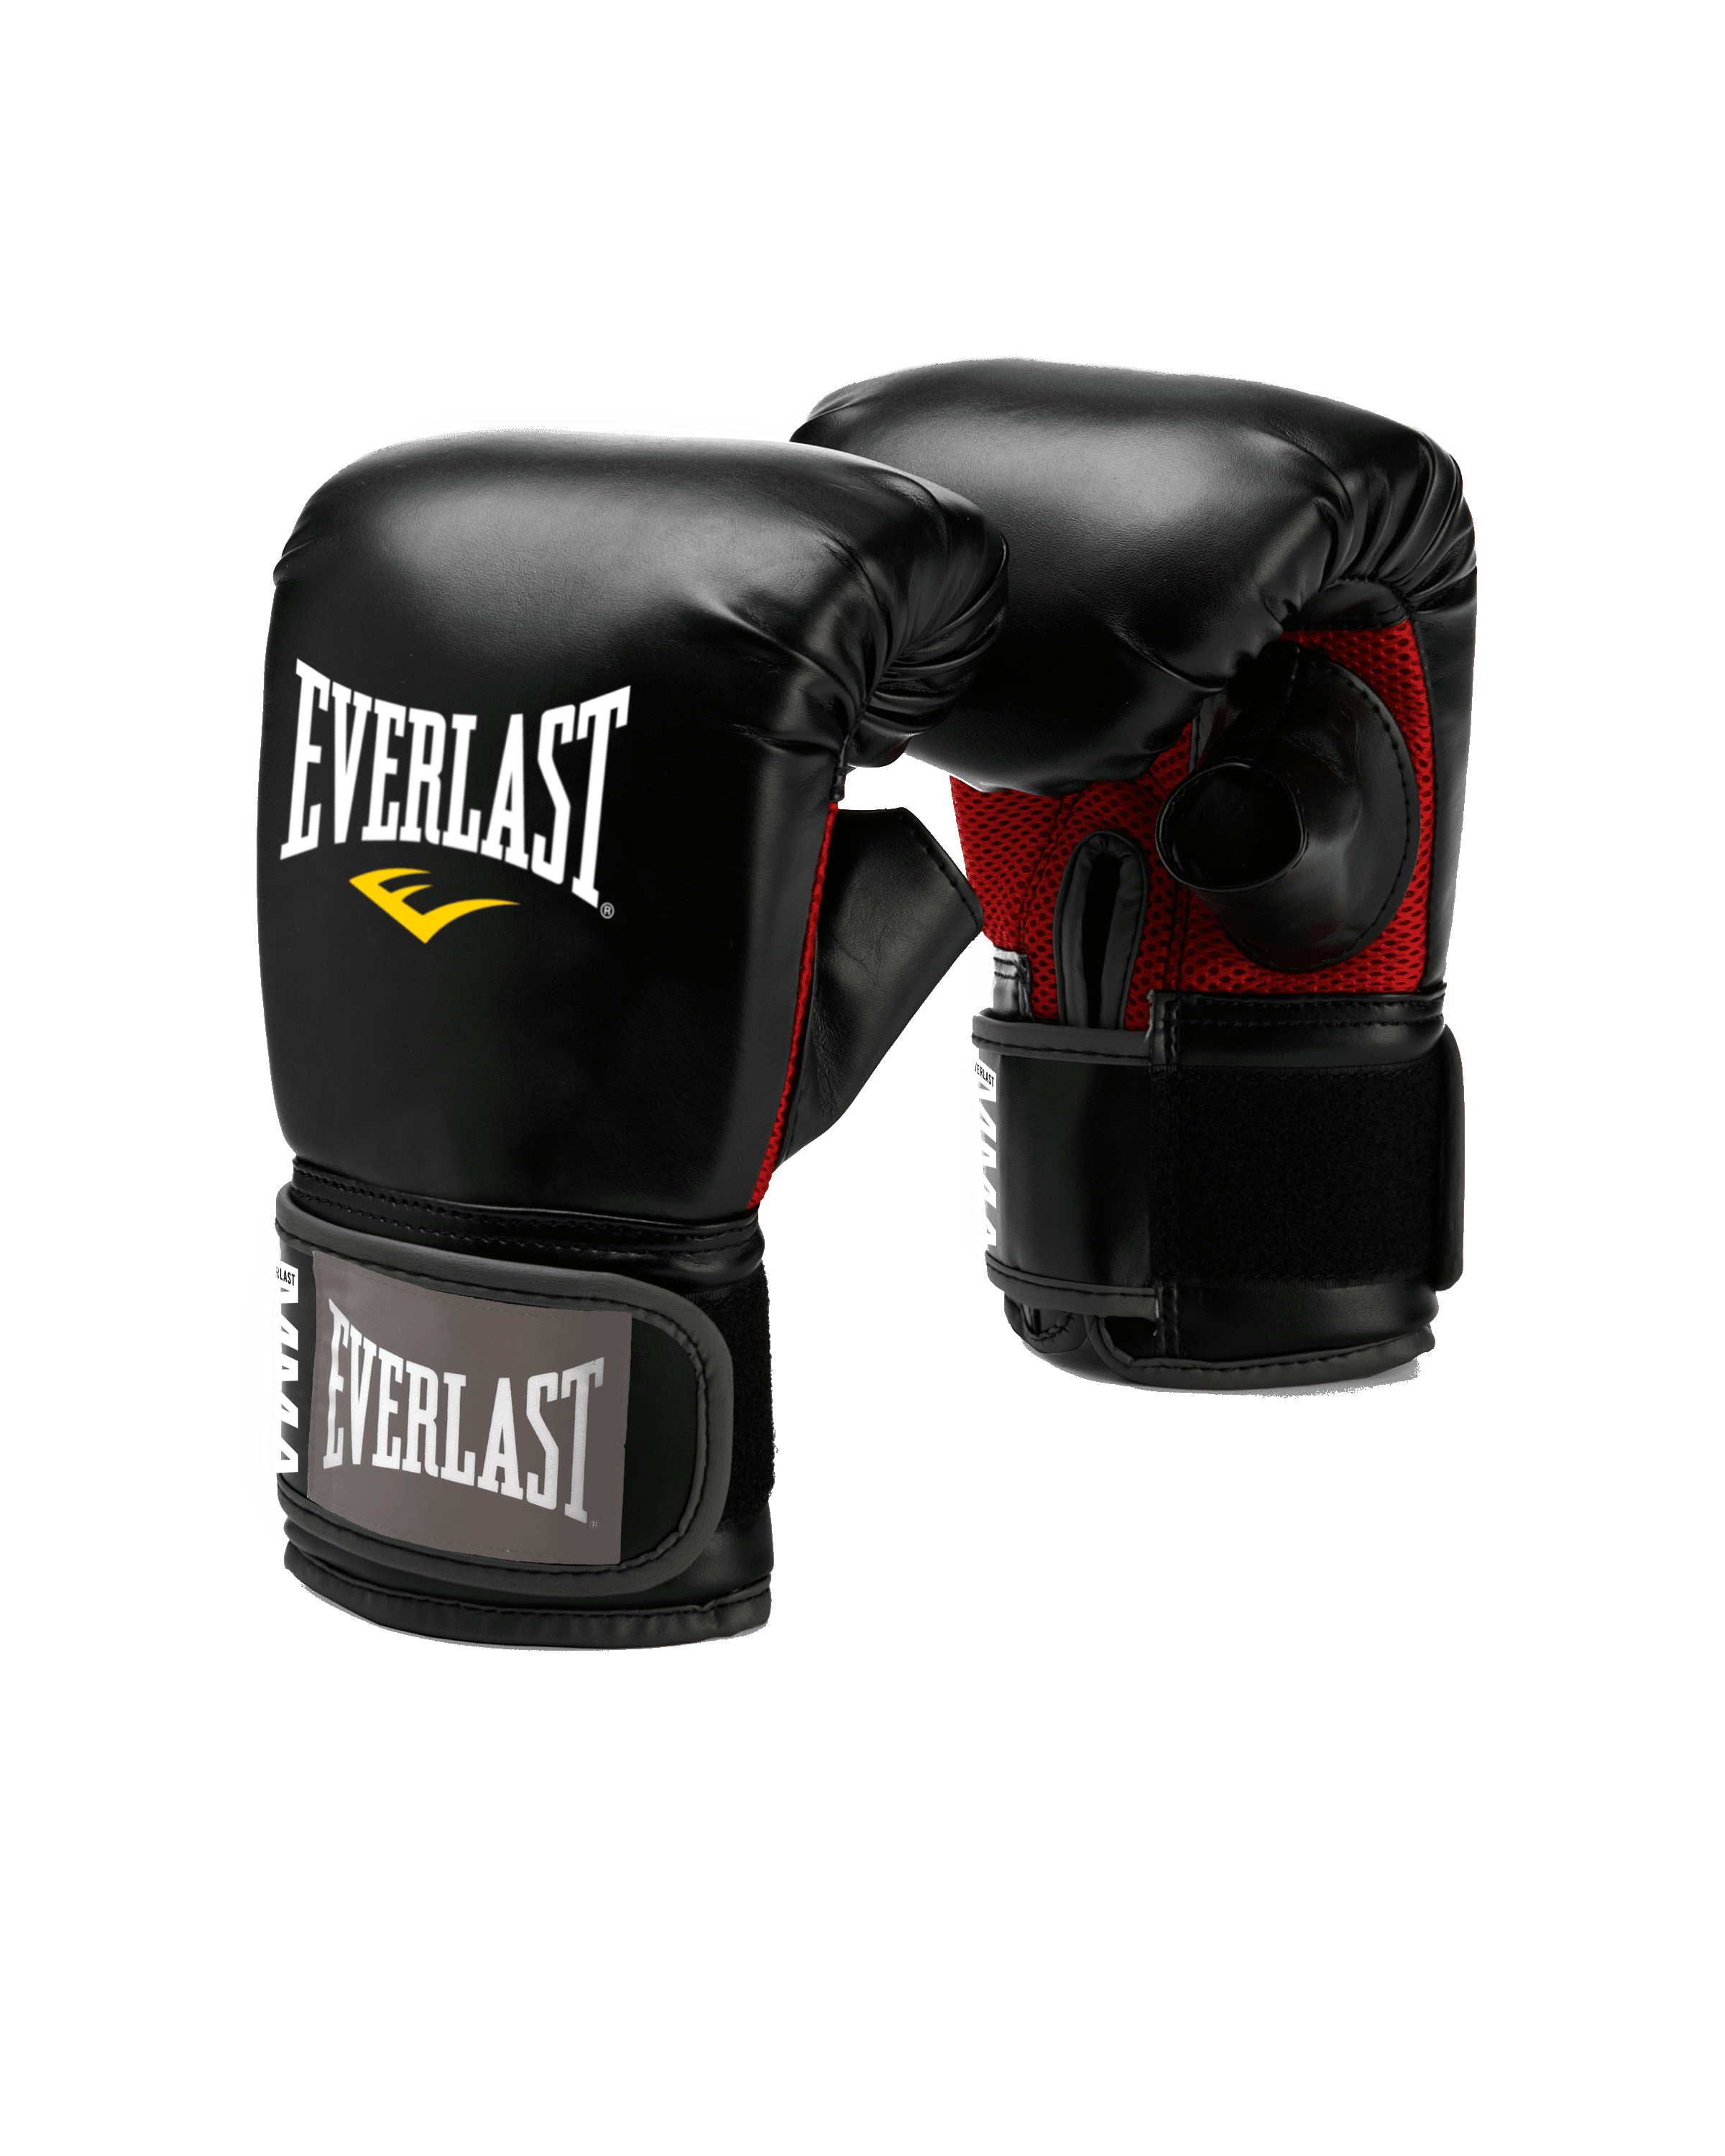 Martial Everlast Gloves, Mixed Black Heavy Large/XL Bag Arts